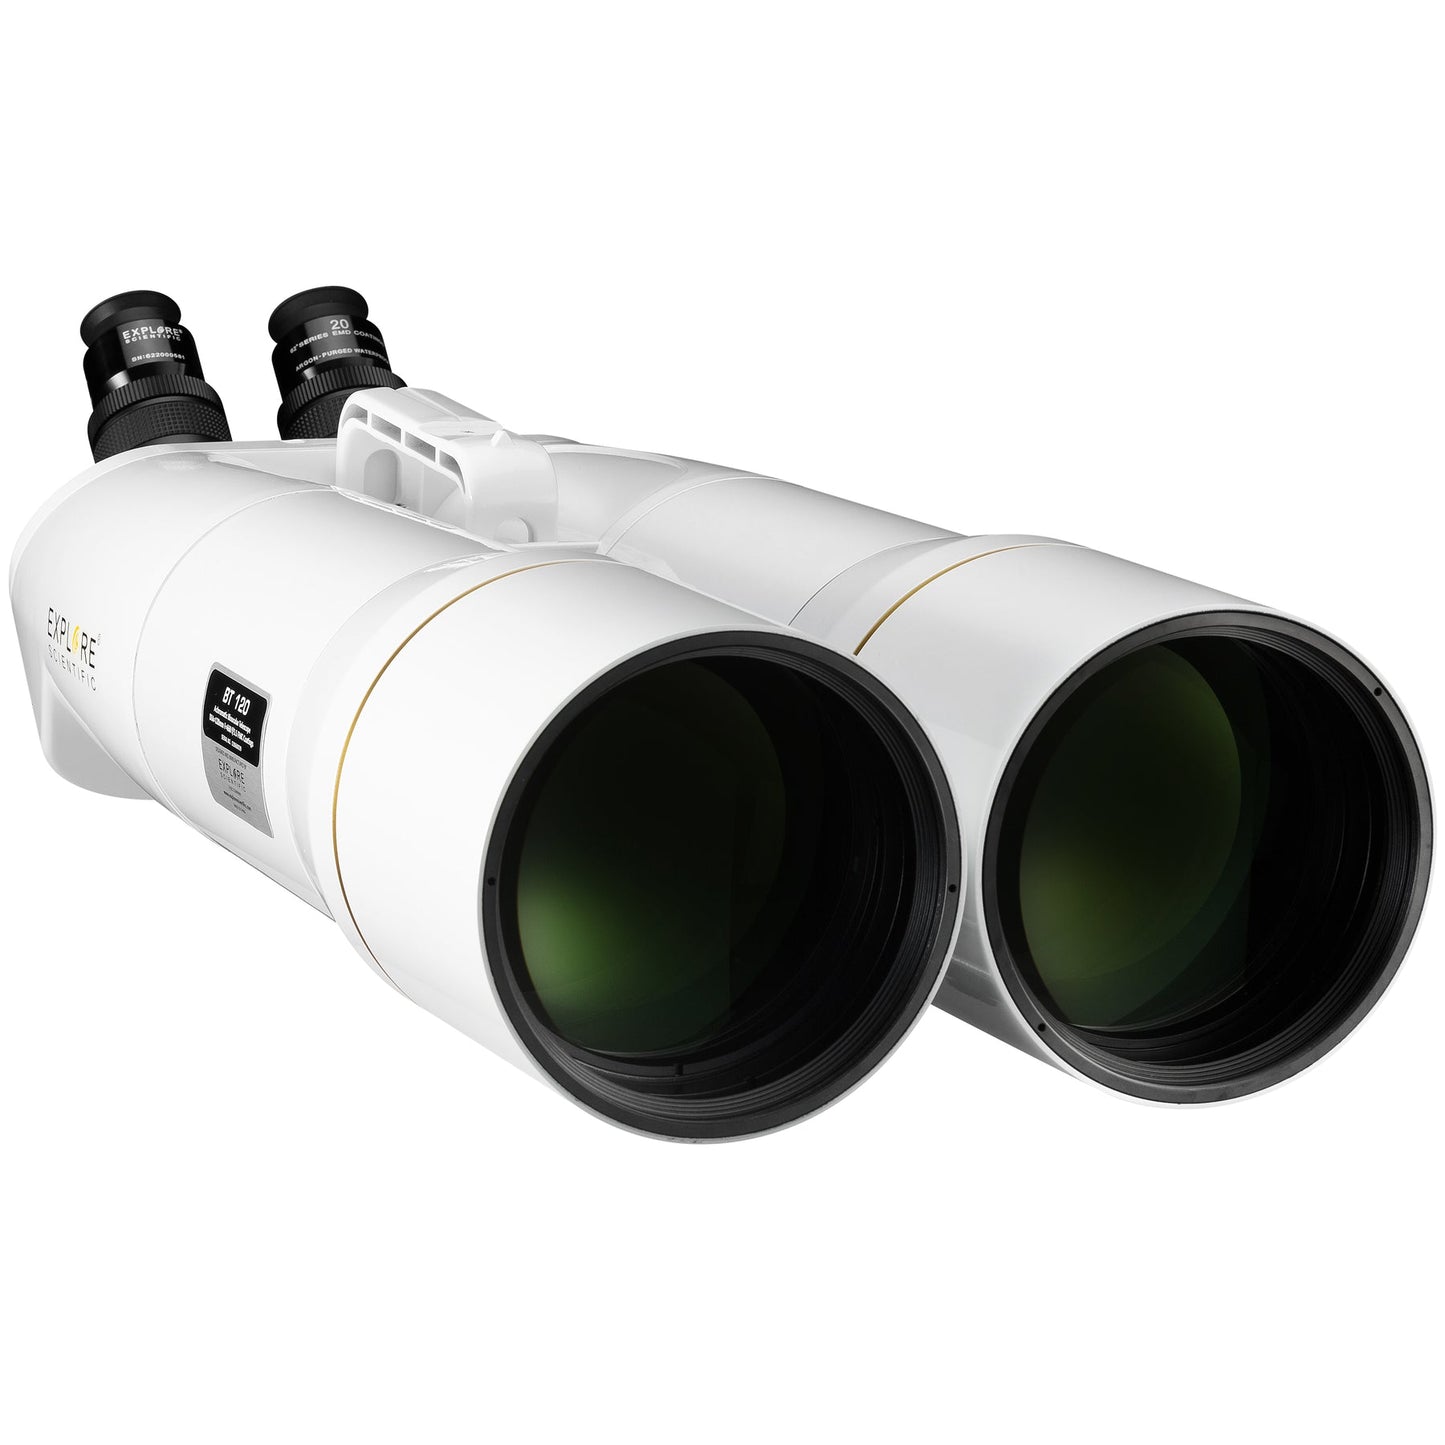 Explore Scientific 01-14230 BT-120 SF Large Binoculars with 62 Degree LER Eyepieces